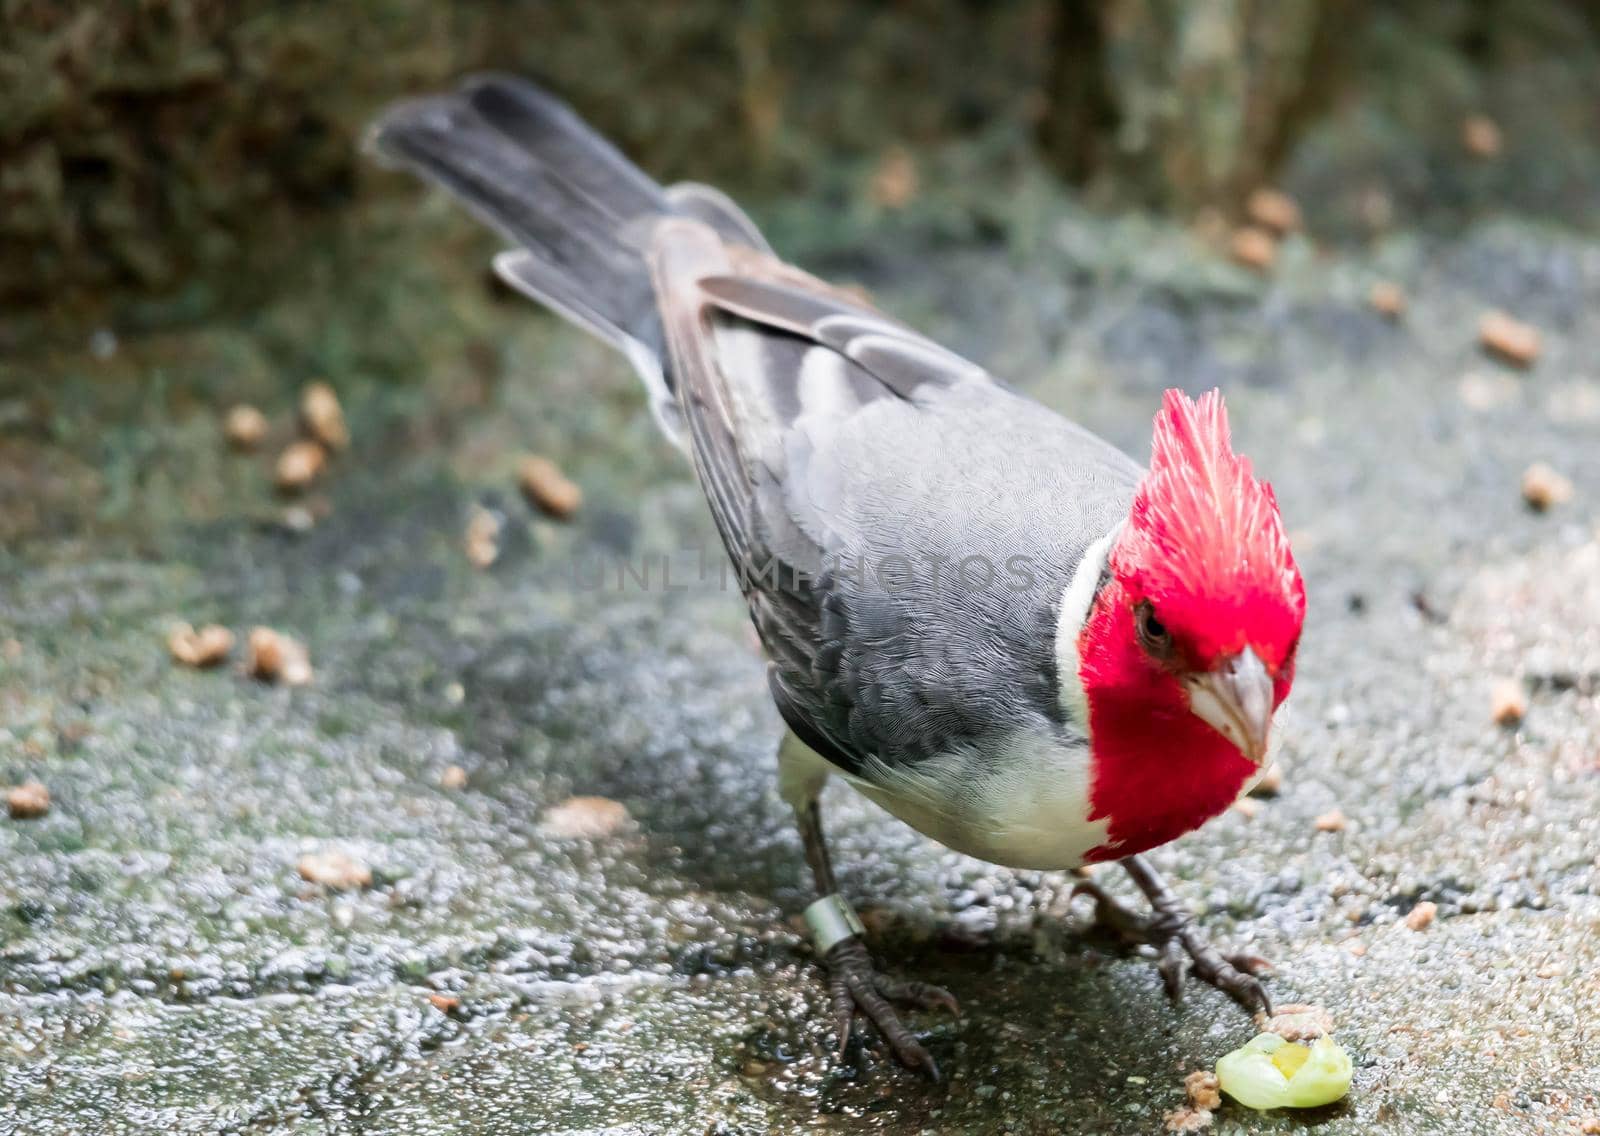 hawaiian red-crested cardinal Paroaria coronata bird by billroque